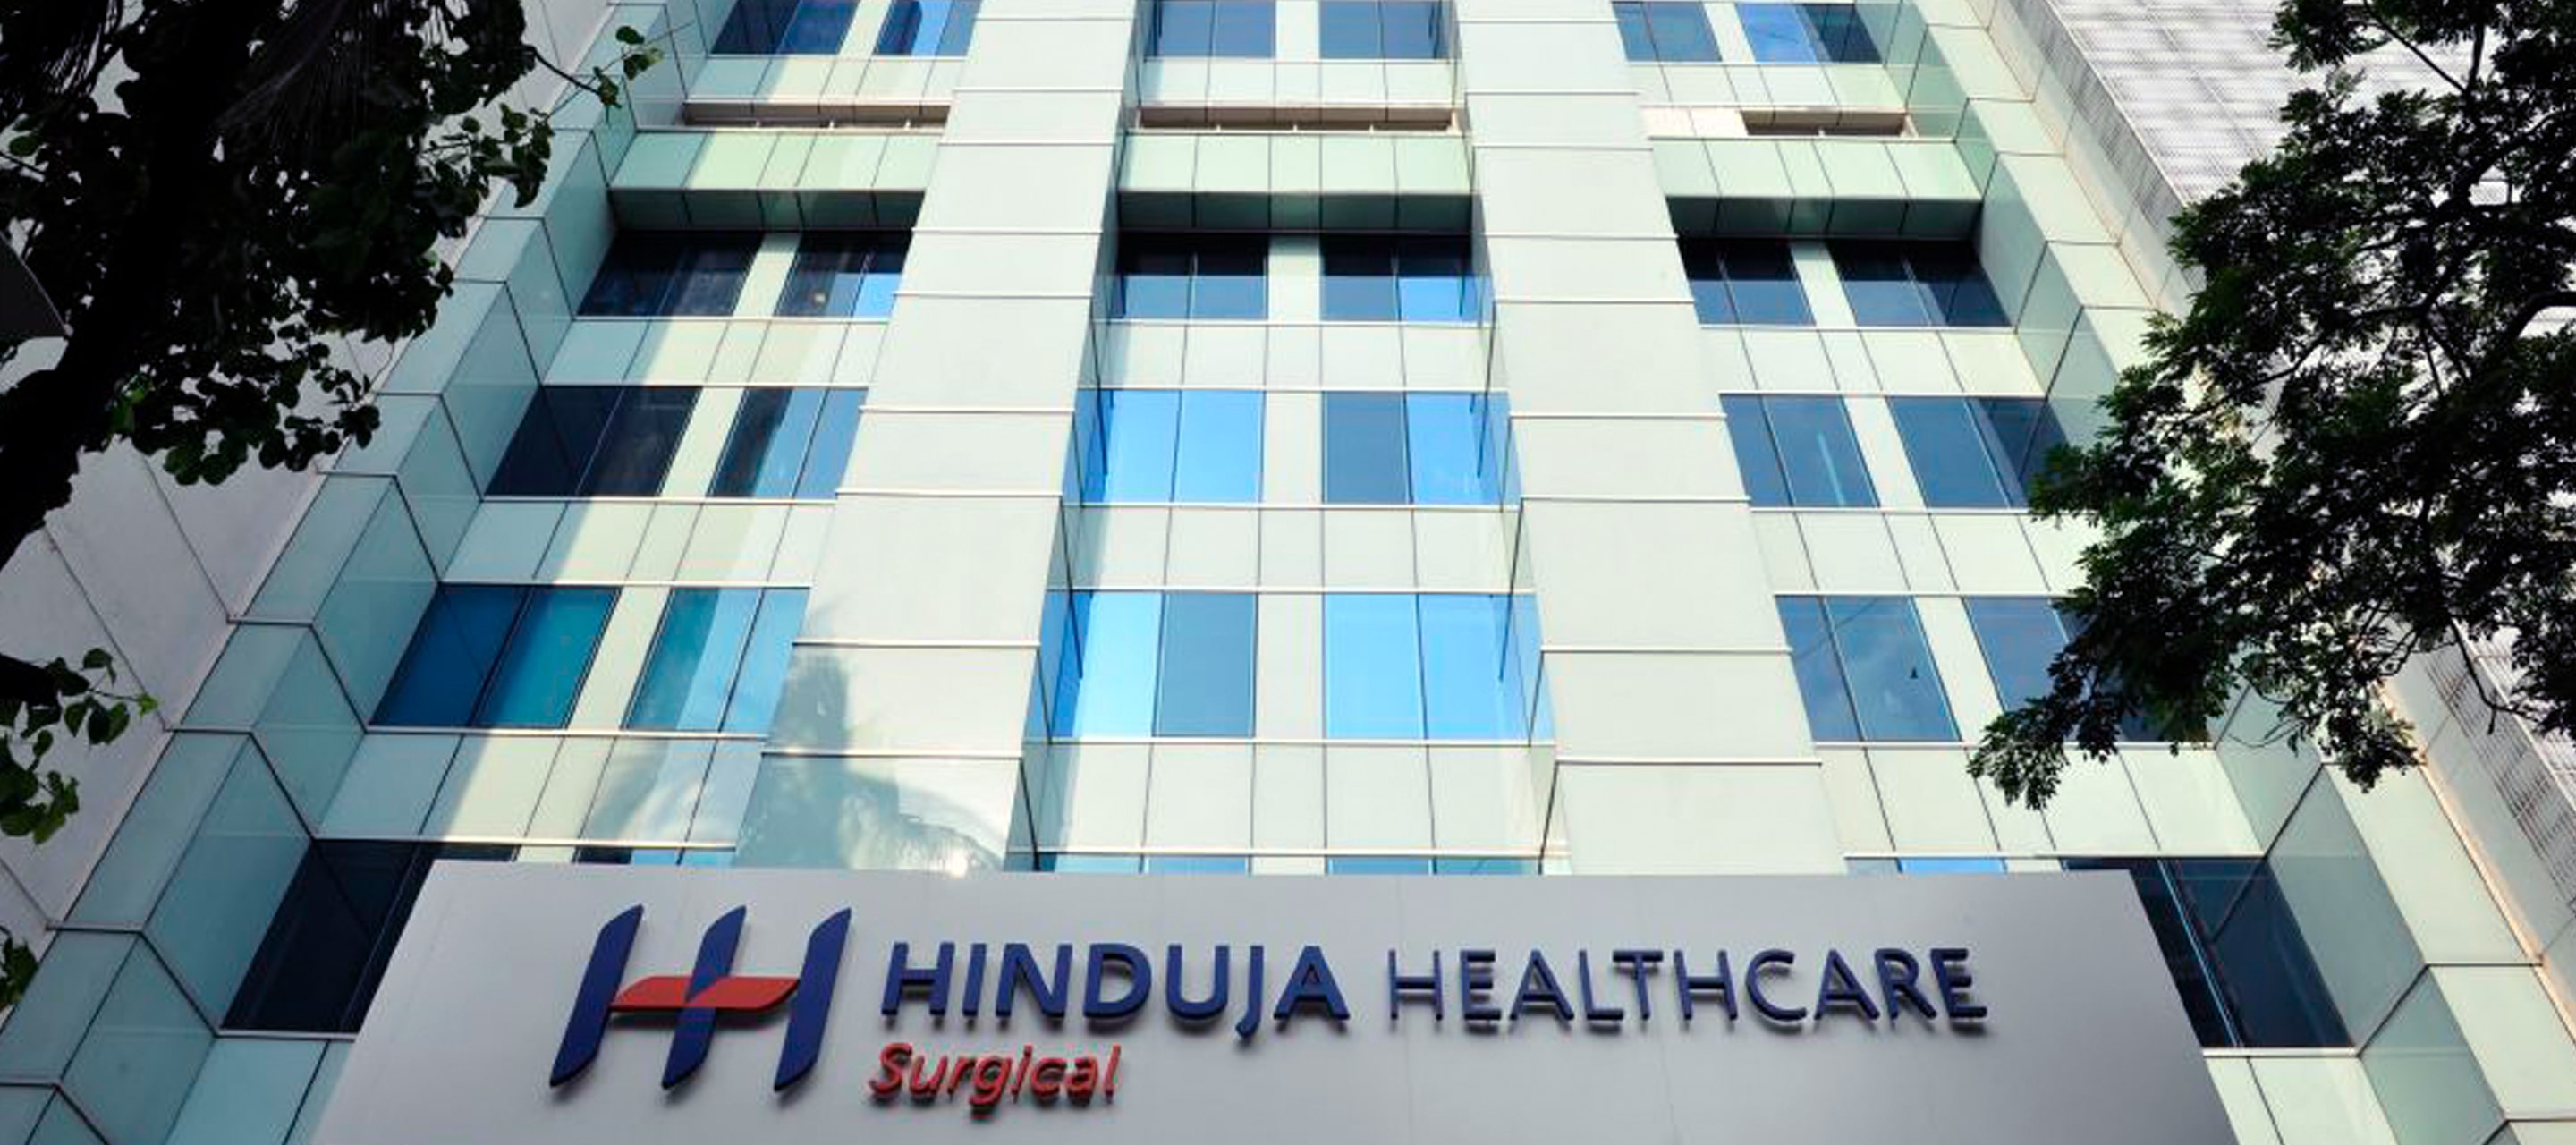 HINDUJA HEALTHCARE 1